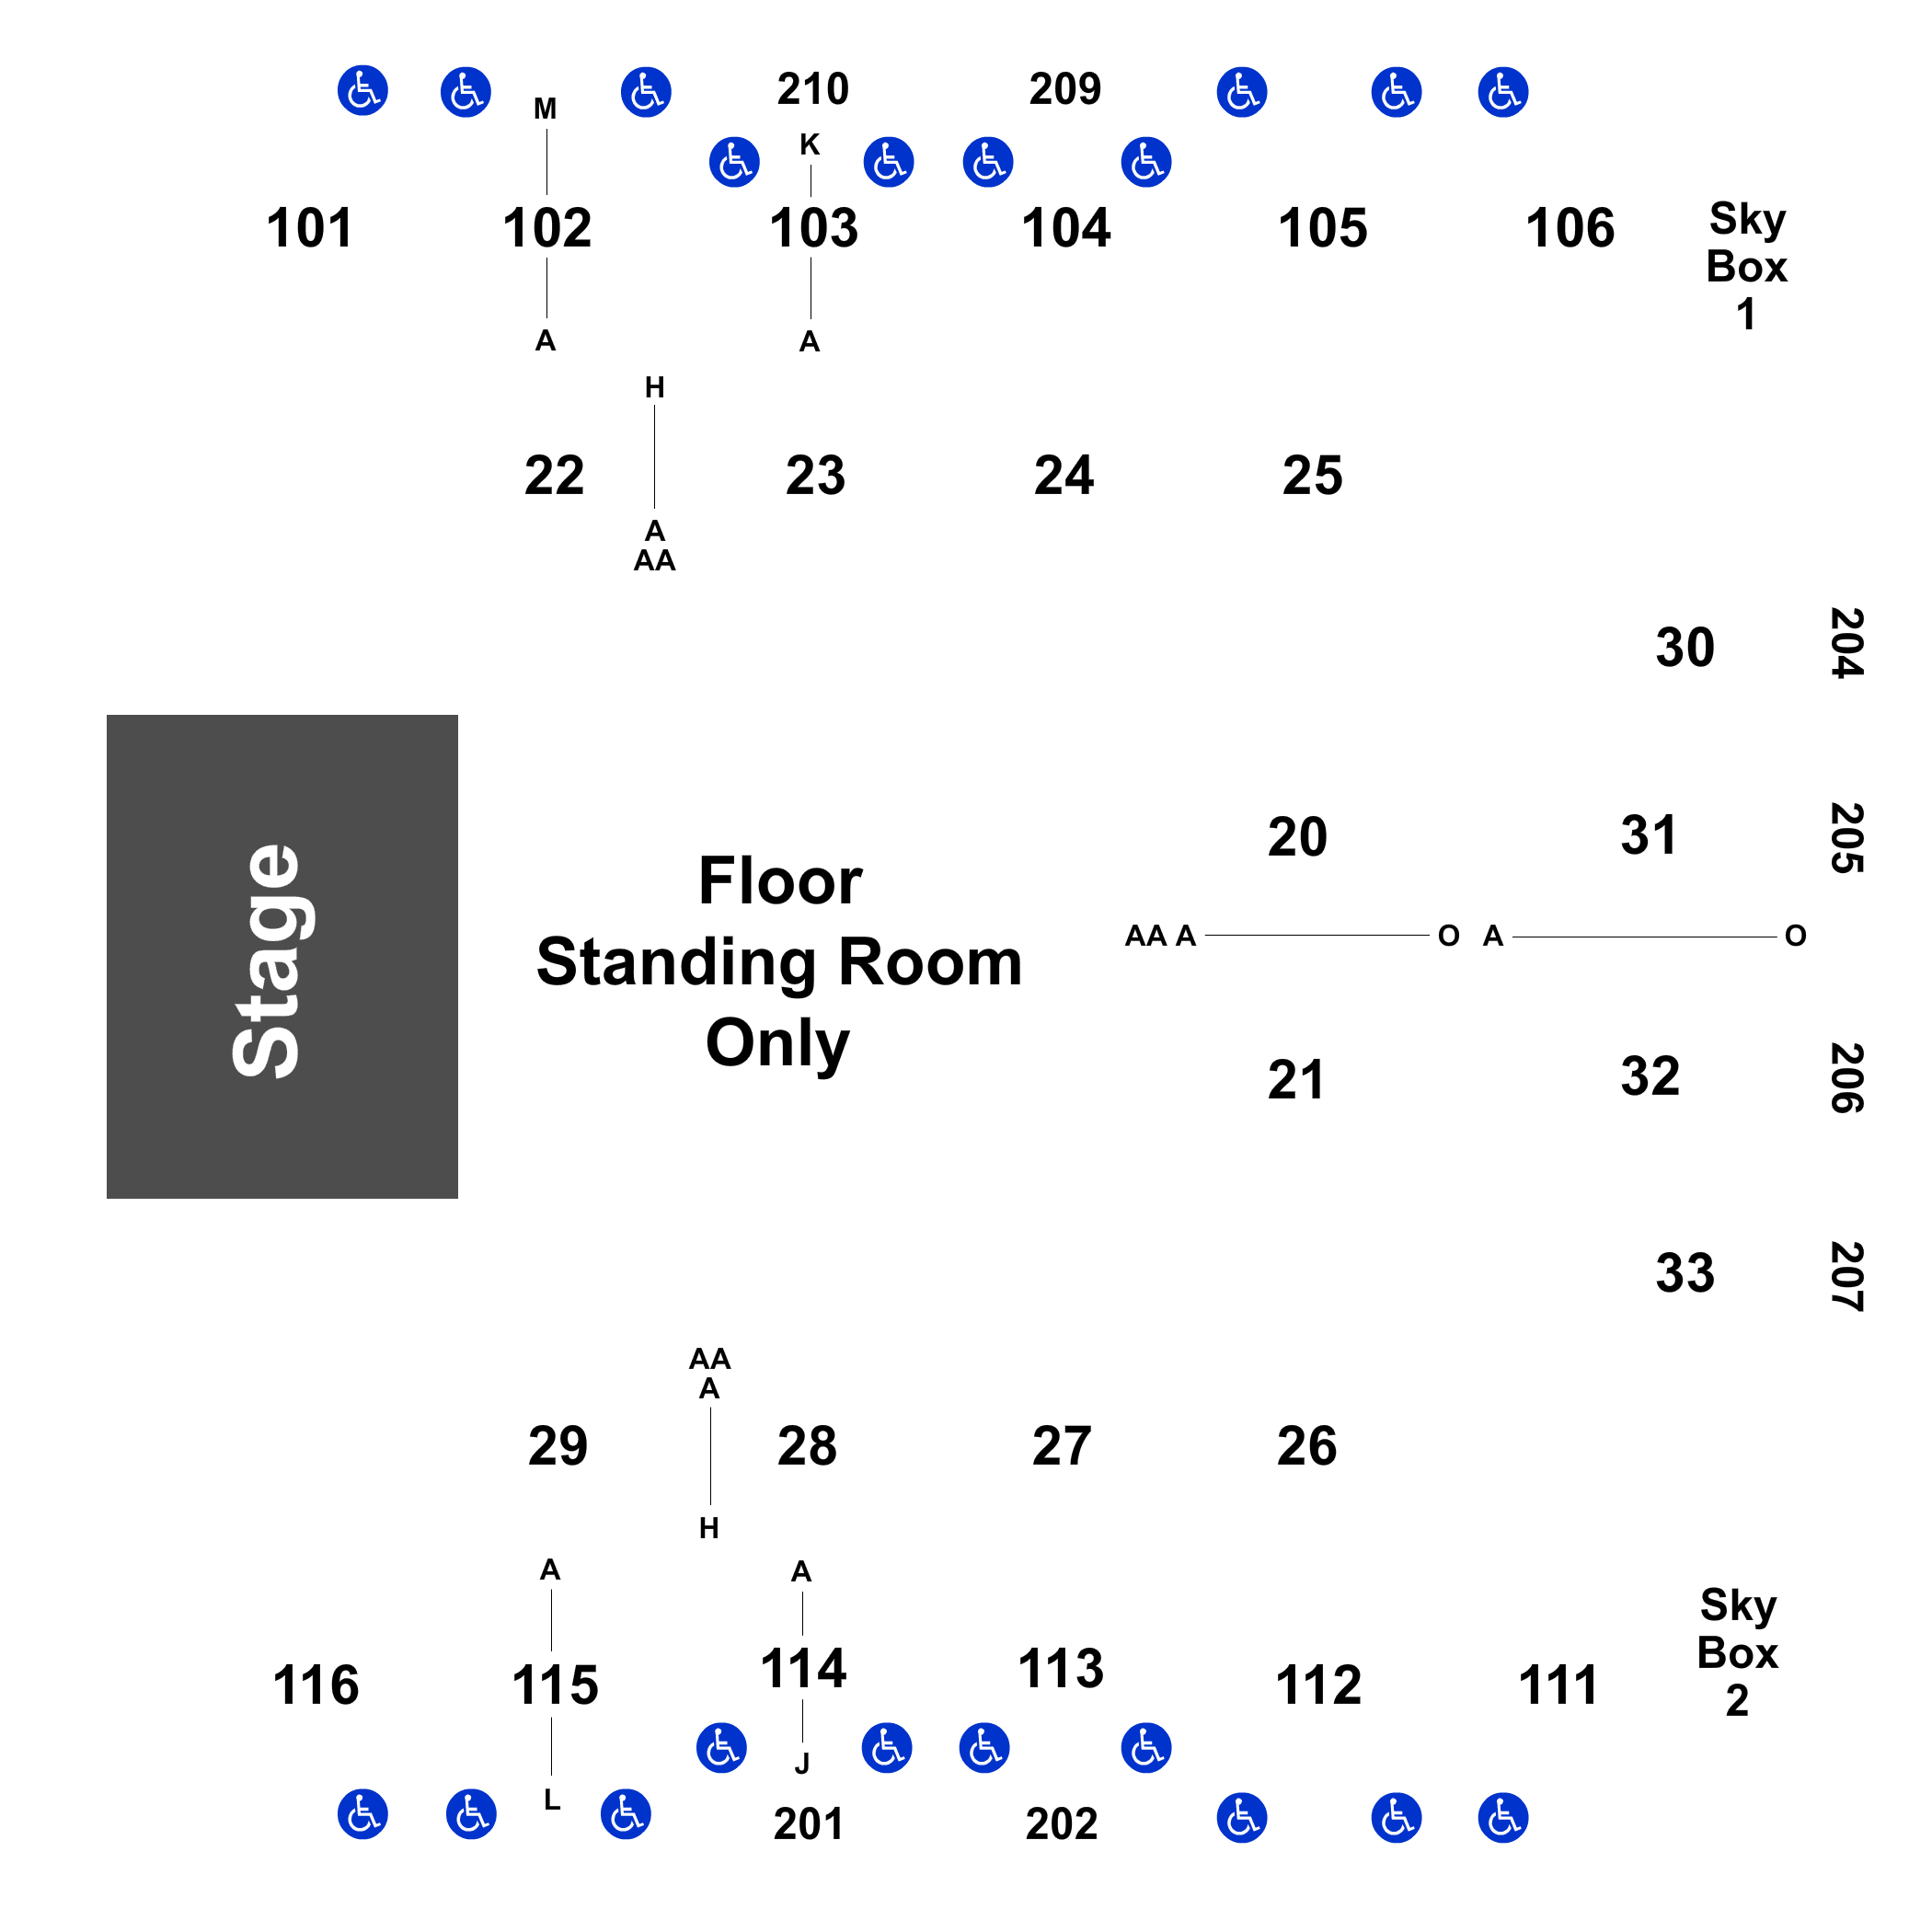 Turning Stone Showroom Seating Chart